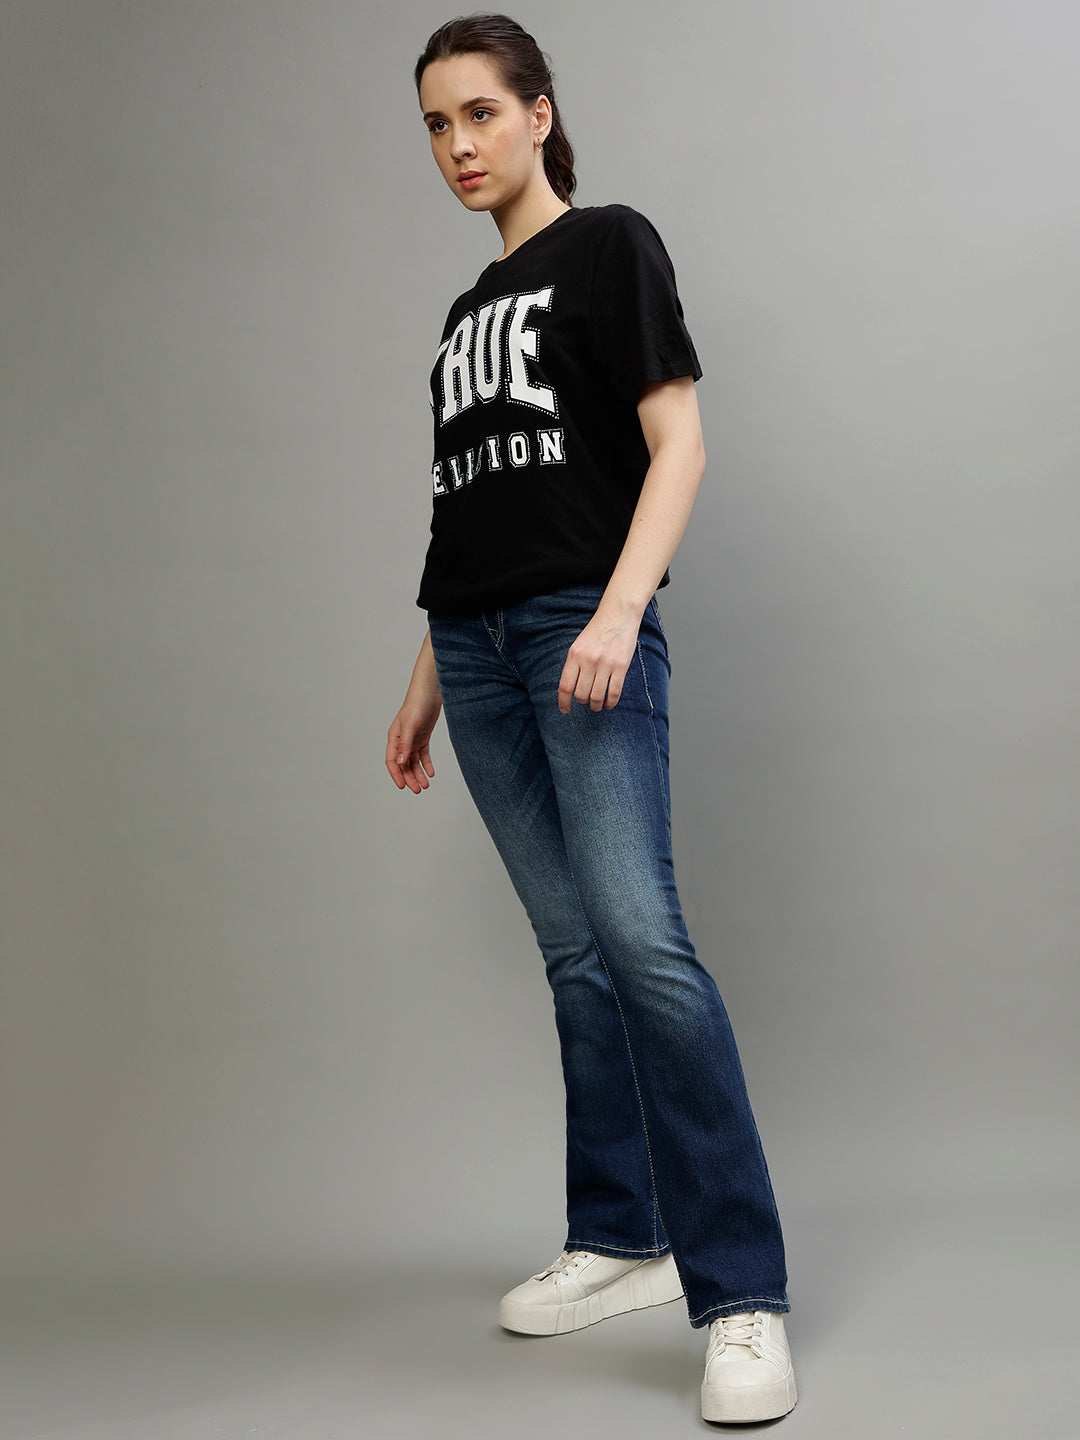 True Religion Women Solid Bootcut Jeans